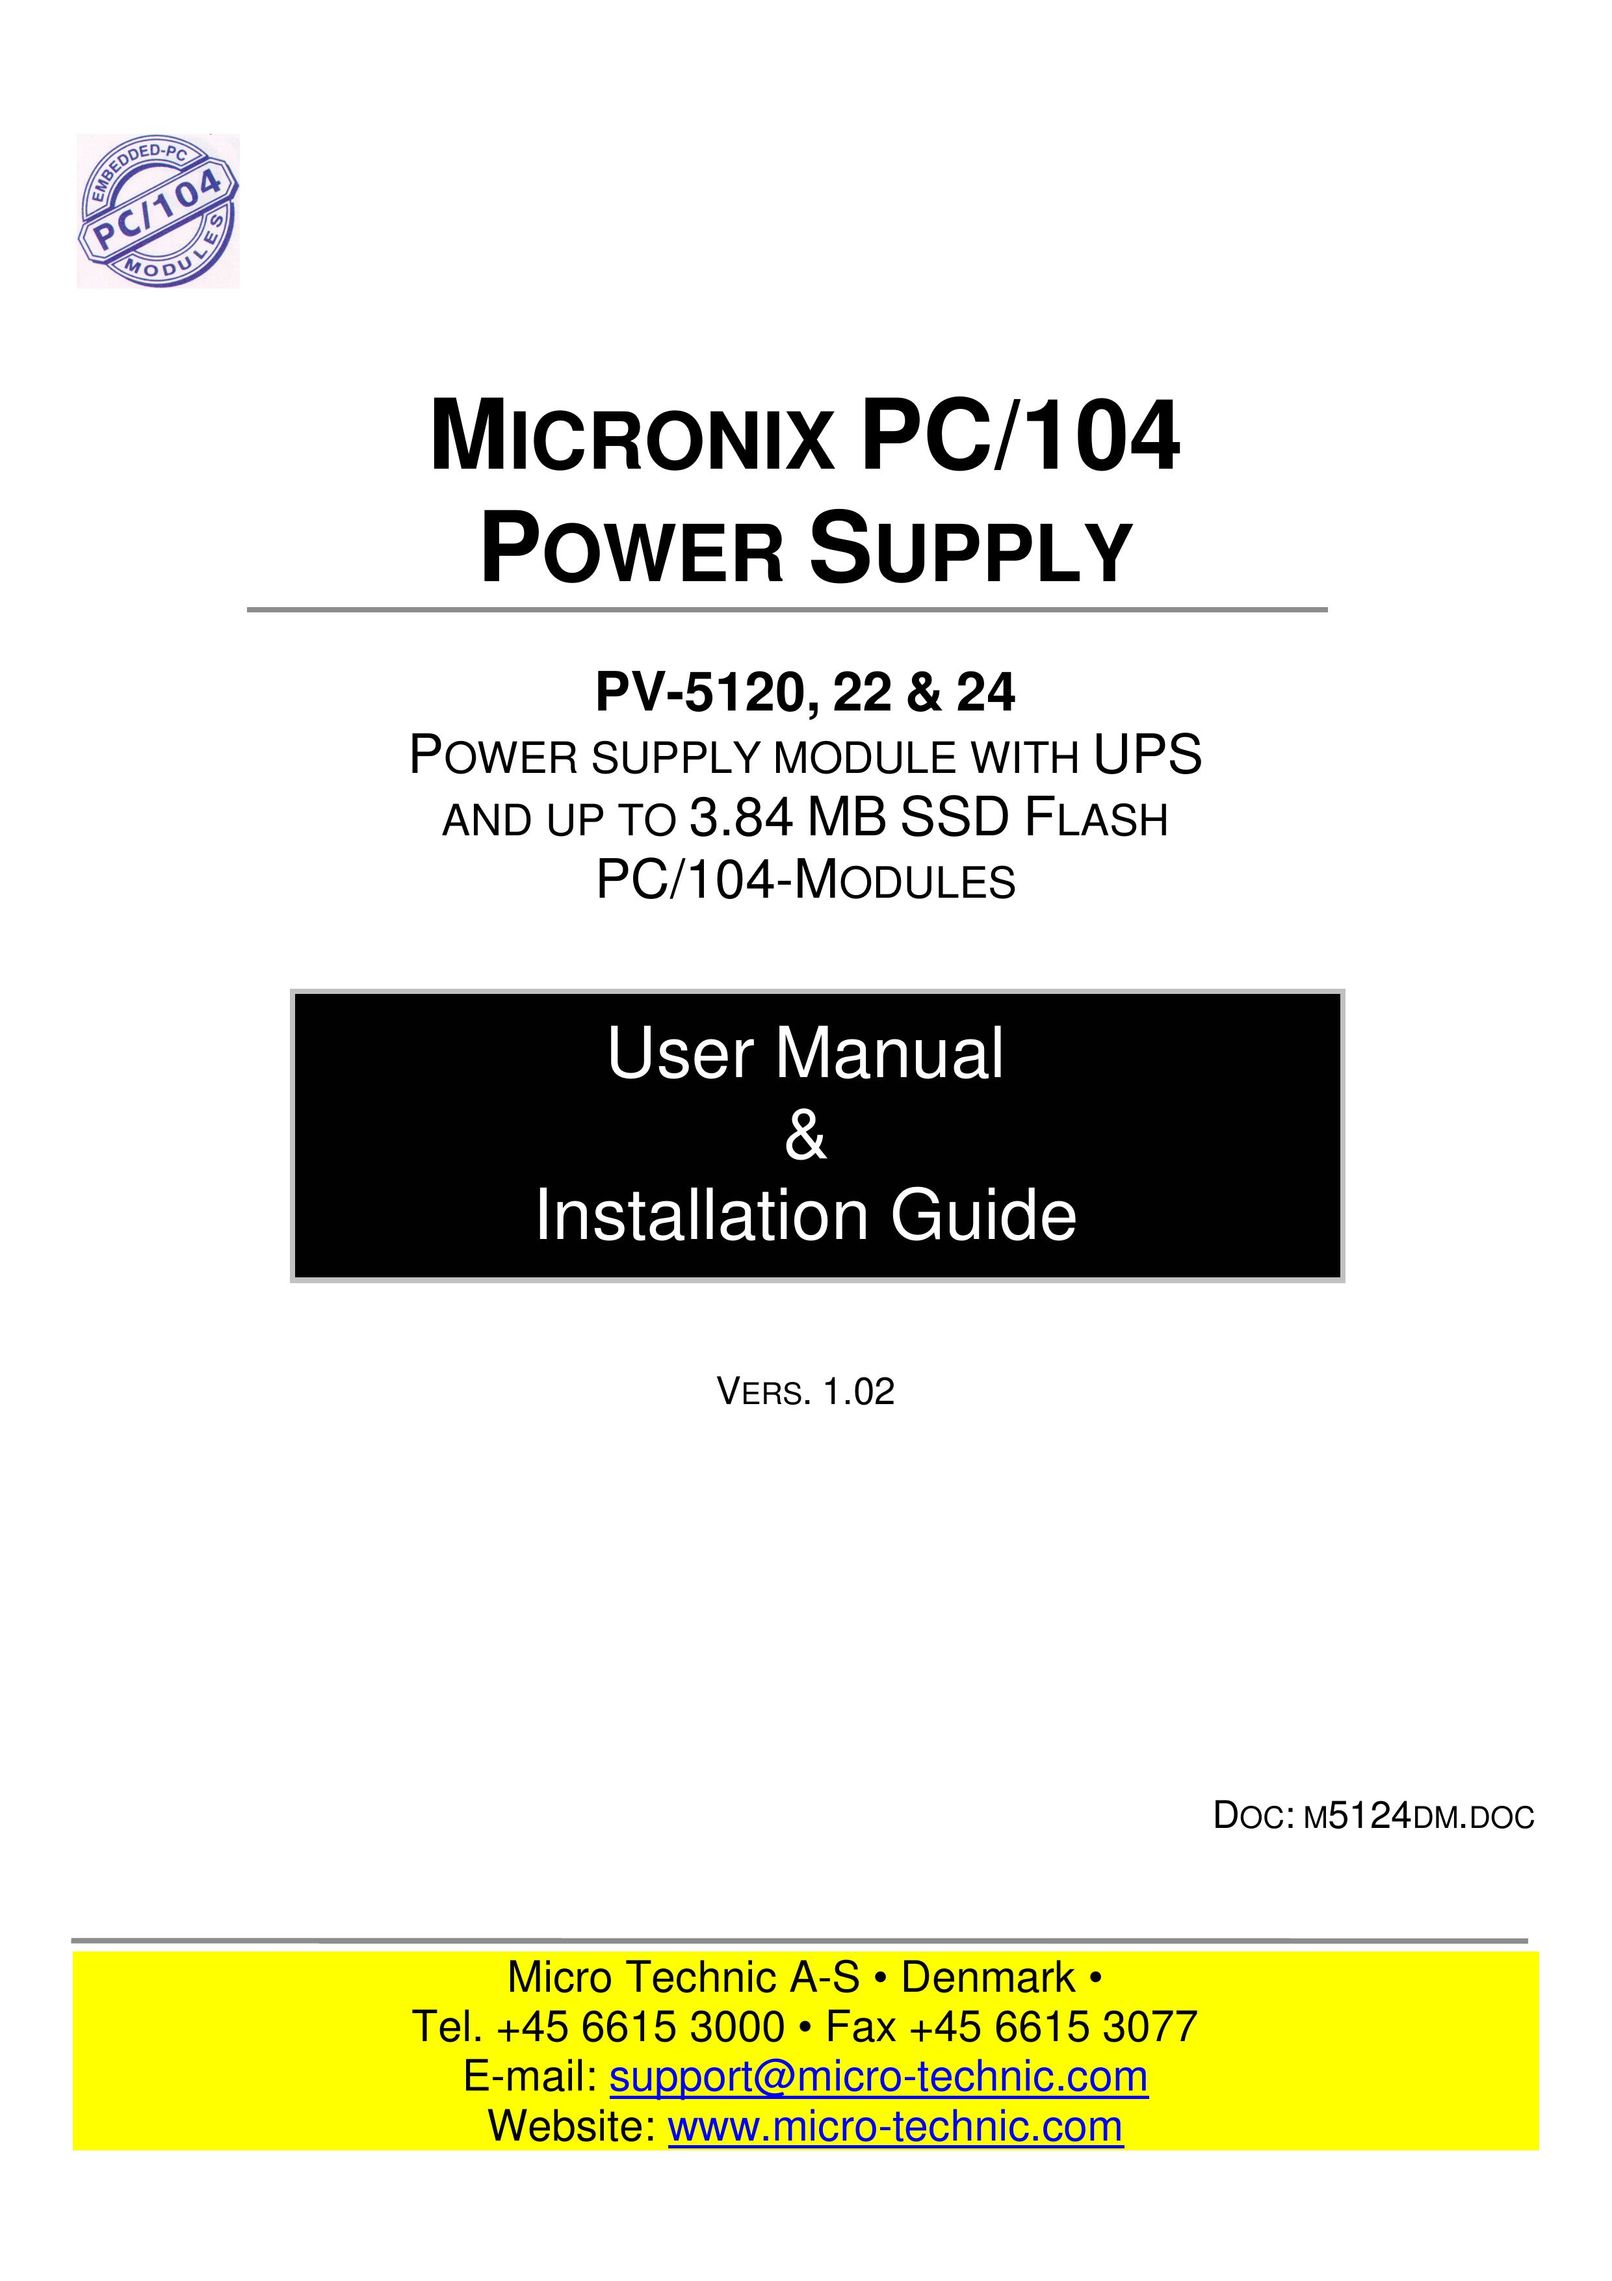 Micro Technic PV-5120 Power Supply User Manual